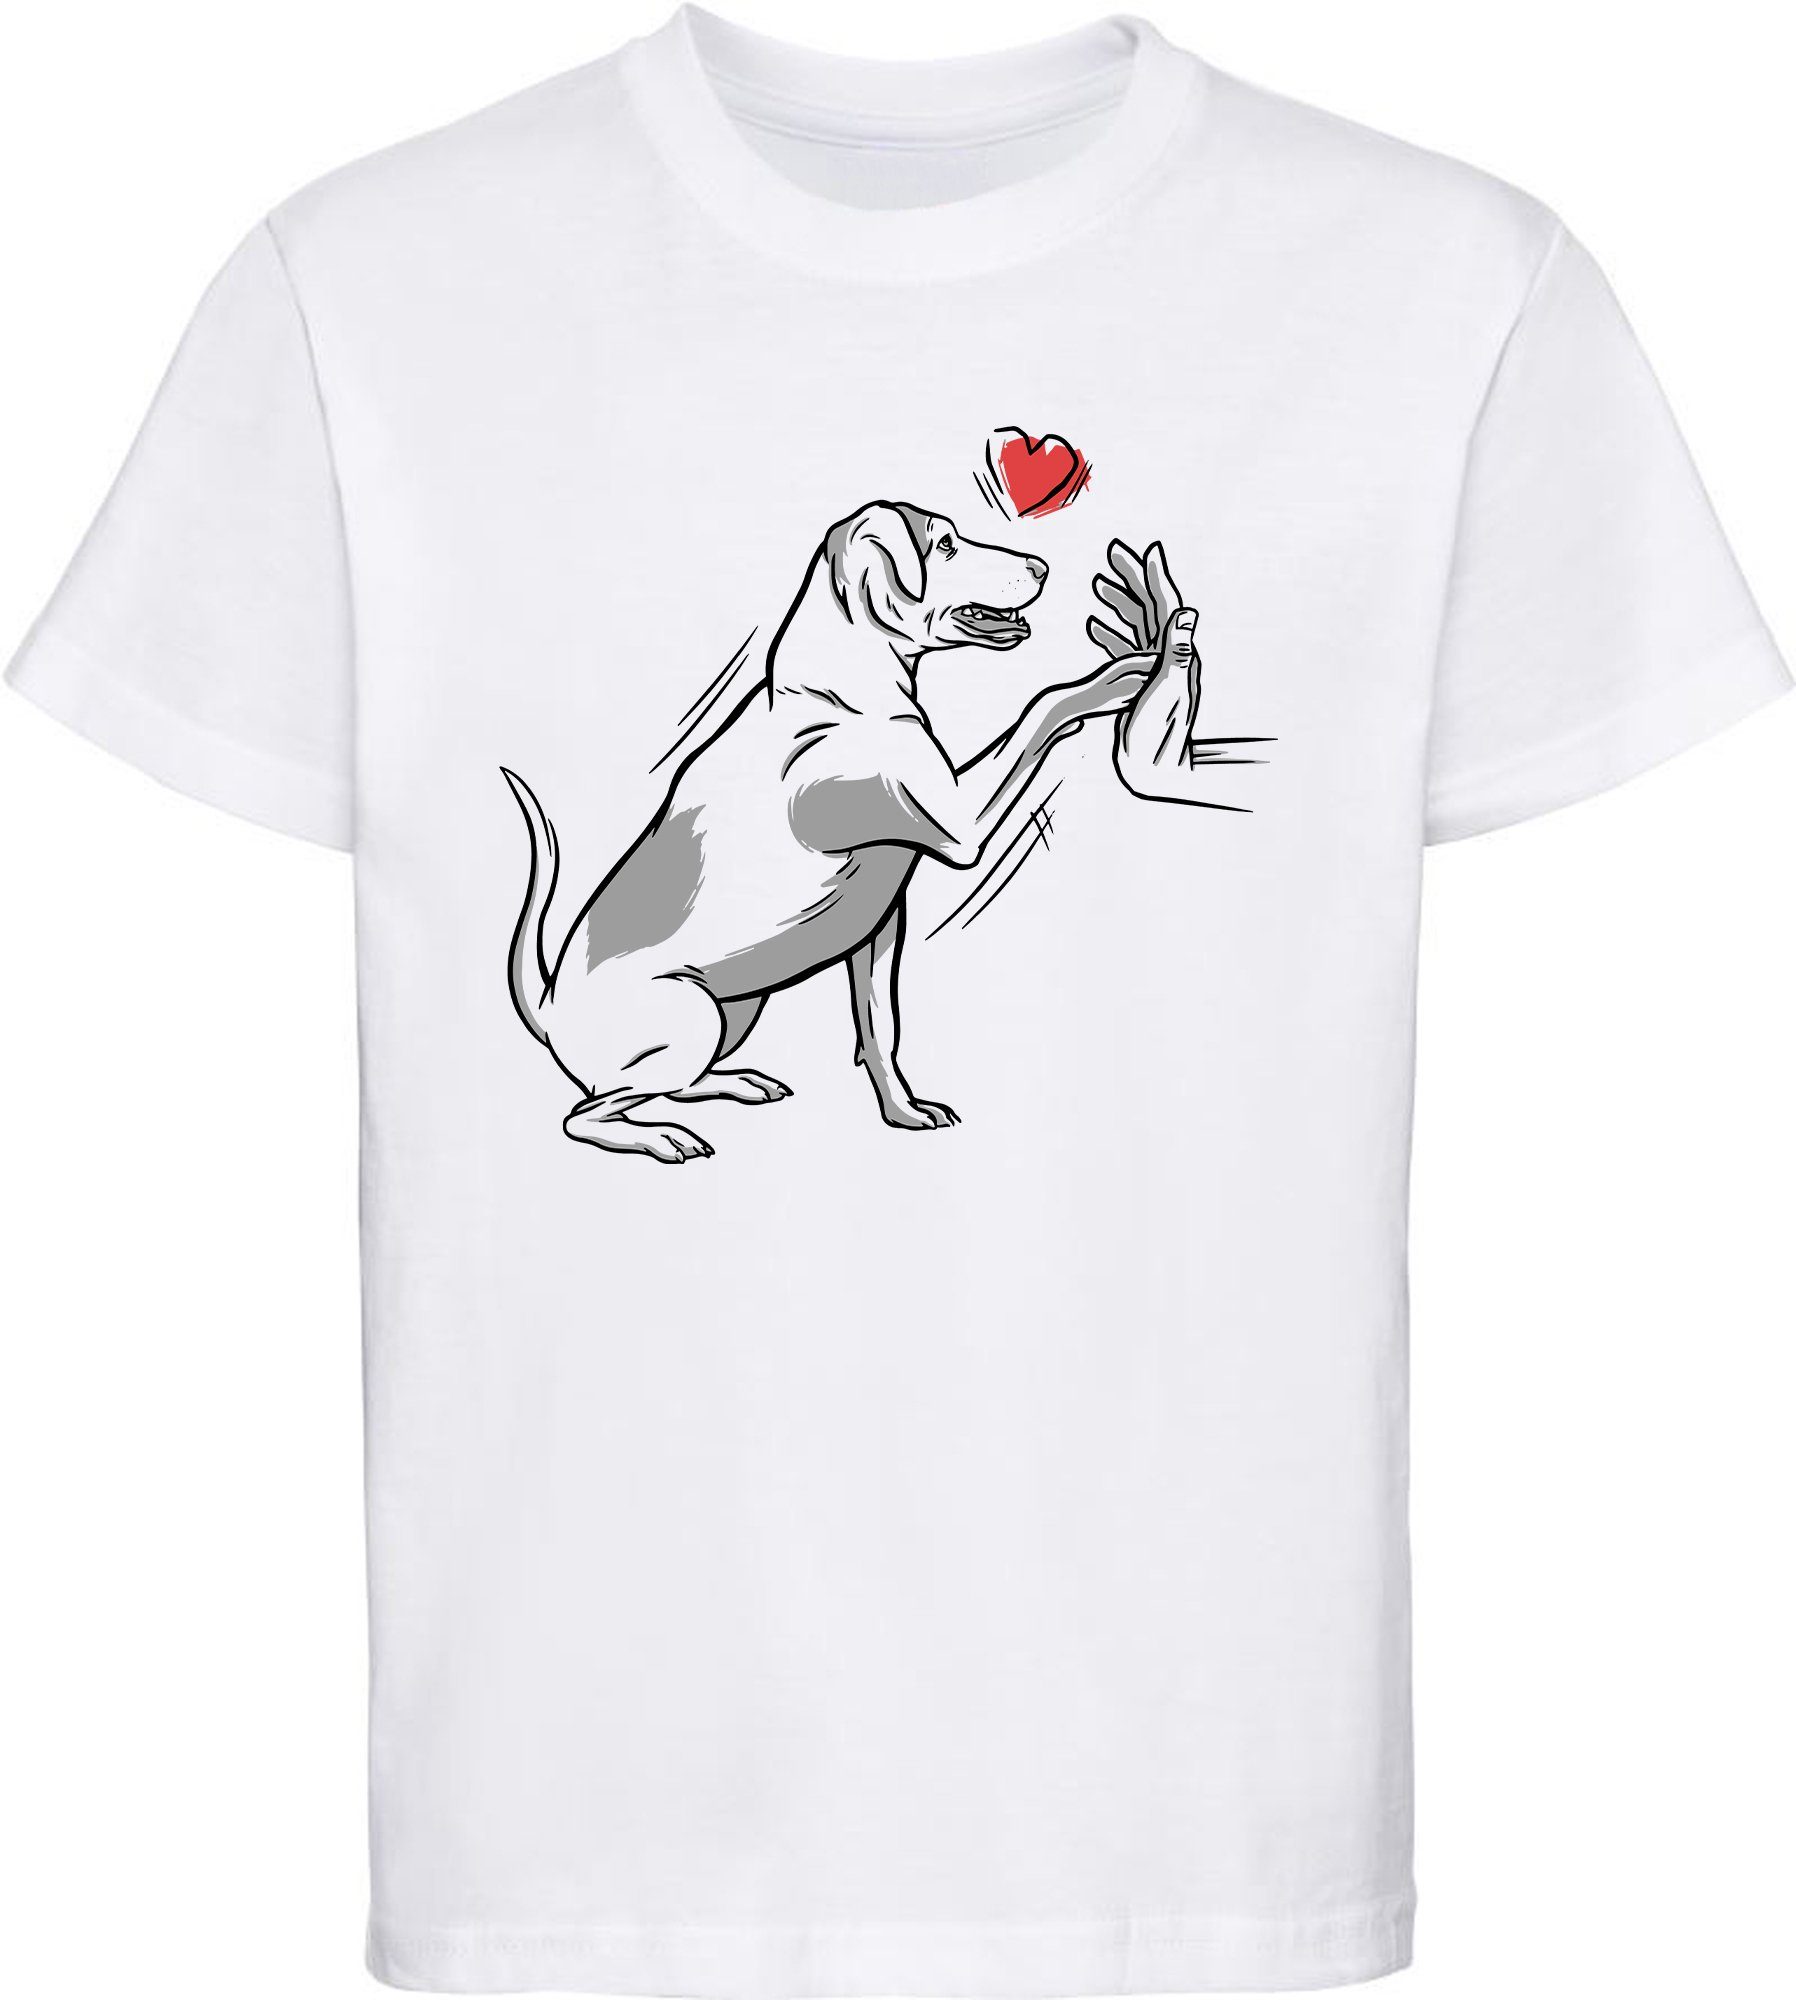 MyDesign24 Print-Shirt Kinder Hunde T-Shirt bedruckt - Labrador gibt Pfötchen Baumwollshirt mit Aufdruck, i234 weiss